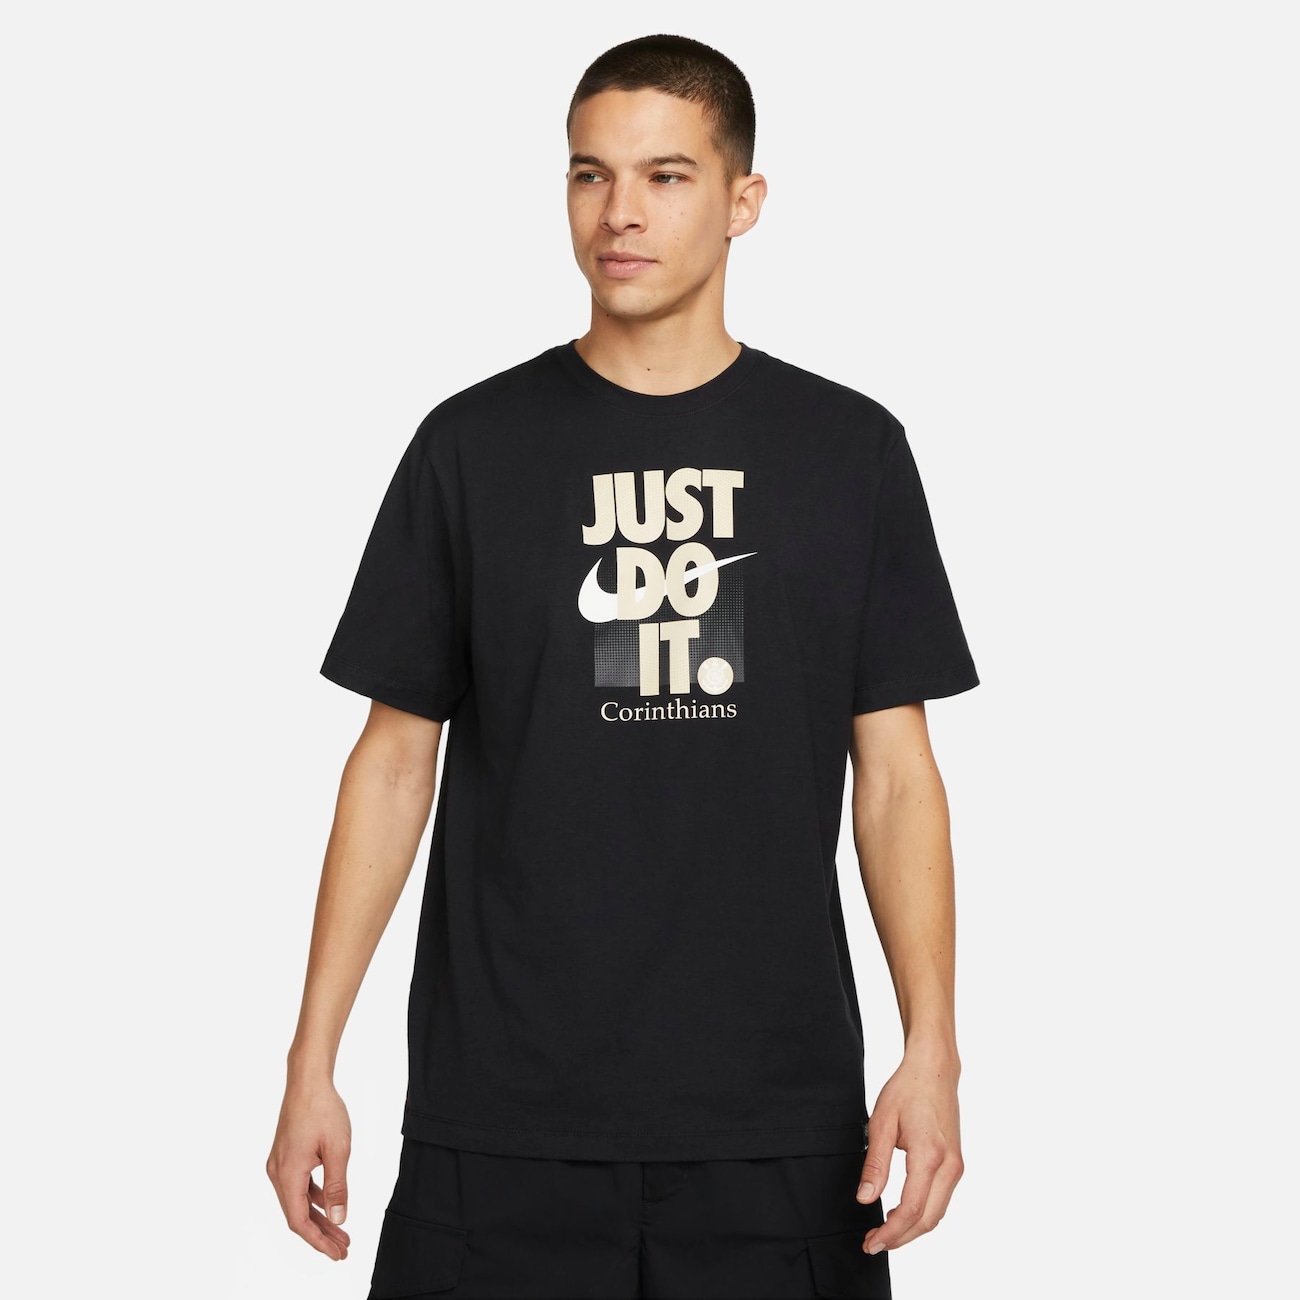 Oferta de Camiseta Corinthians Just Do It Masculina Nike - Just Do It